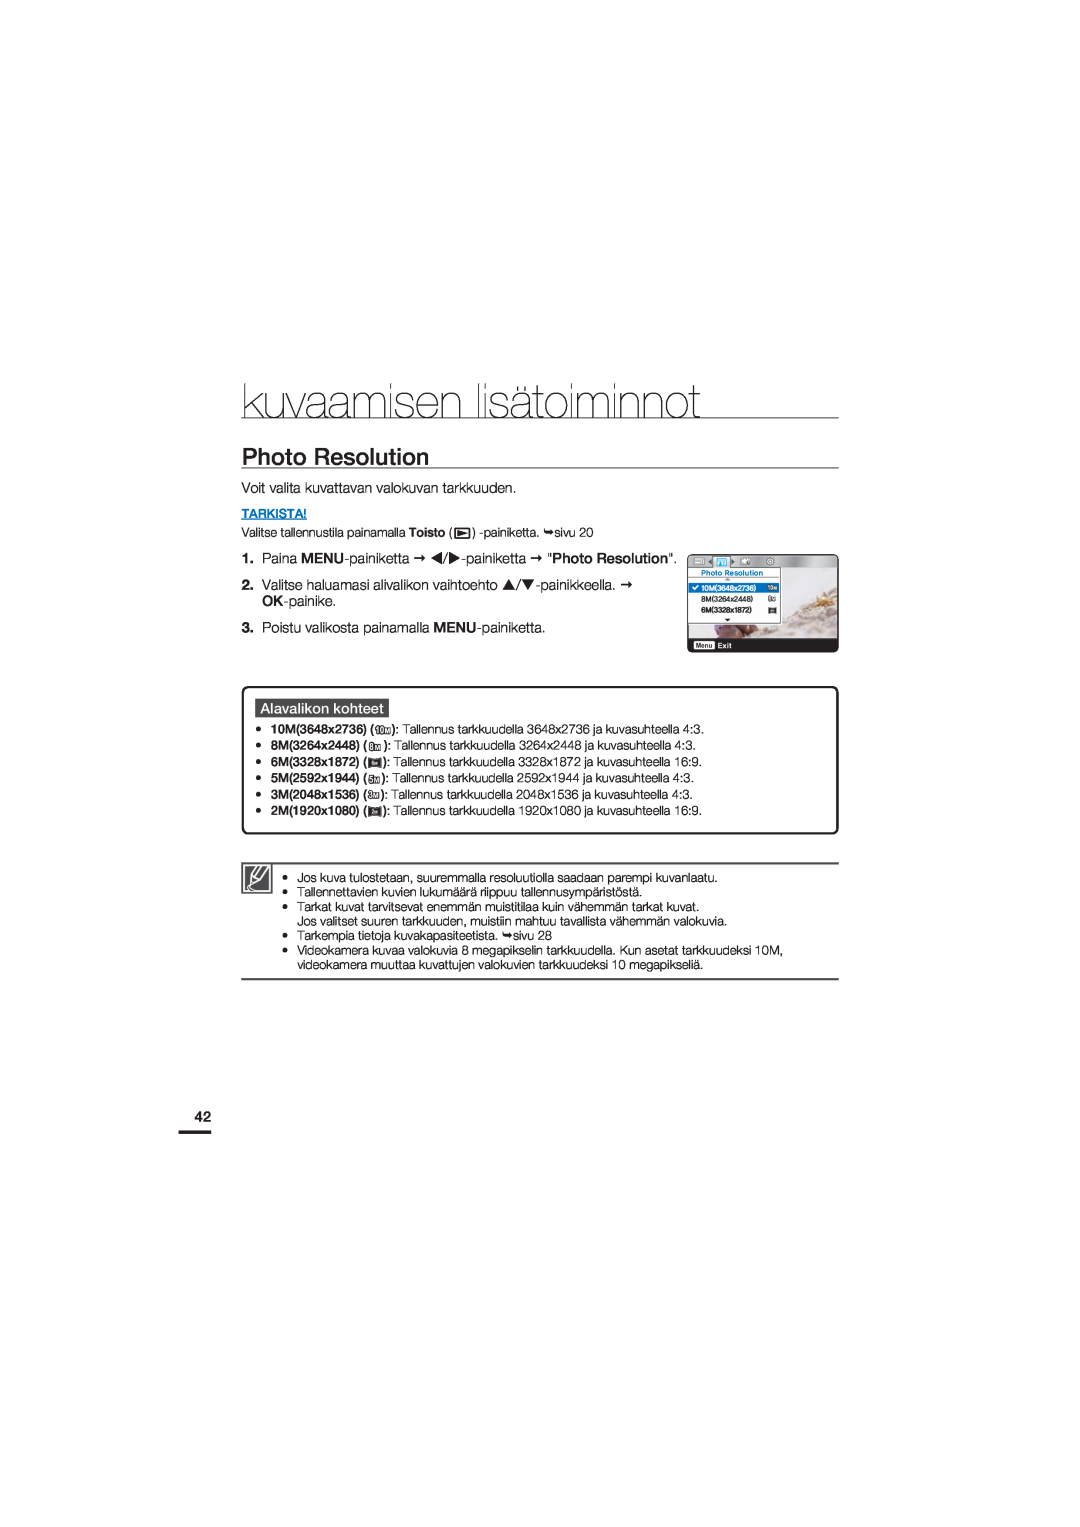 Samsung HMX-U20BP/EDC manual Photo Resolution, kuvaamisen lisätoiminnot, Alavalikon kohteet, Tarkista, . Y 